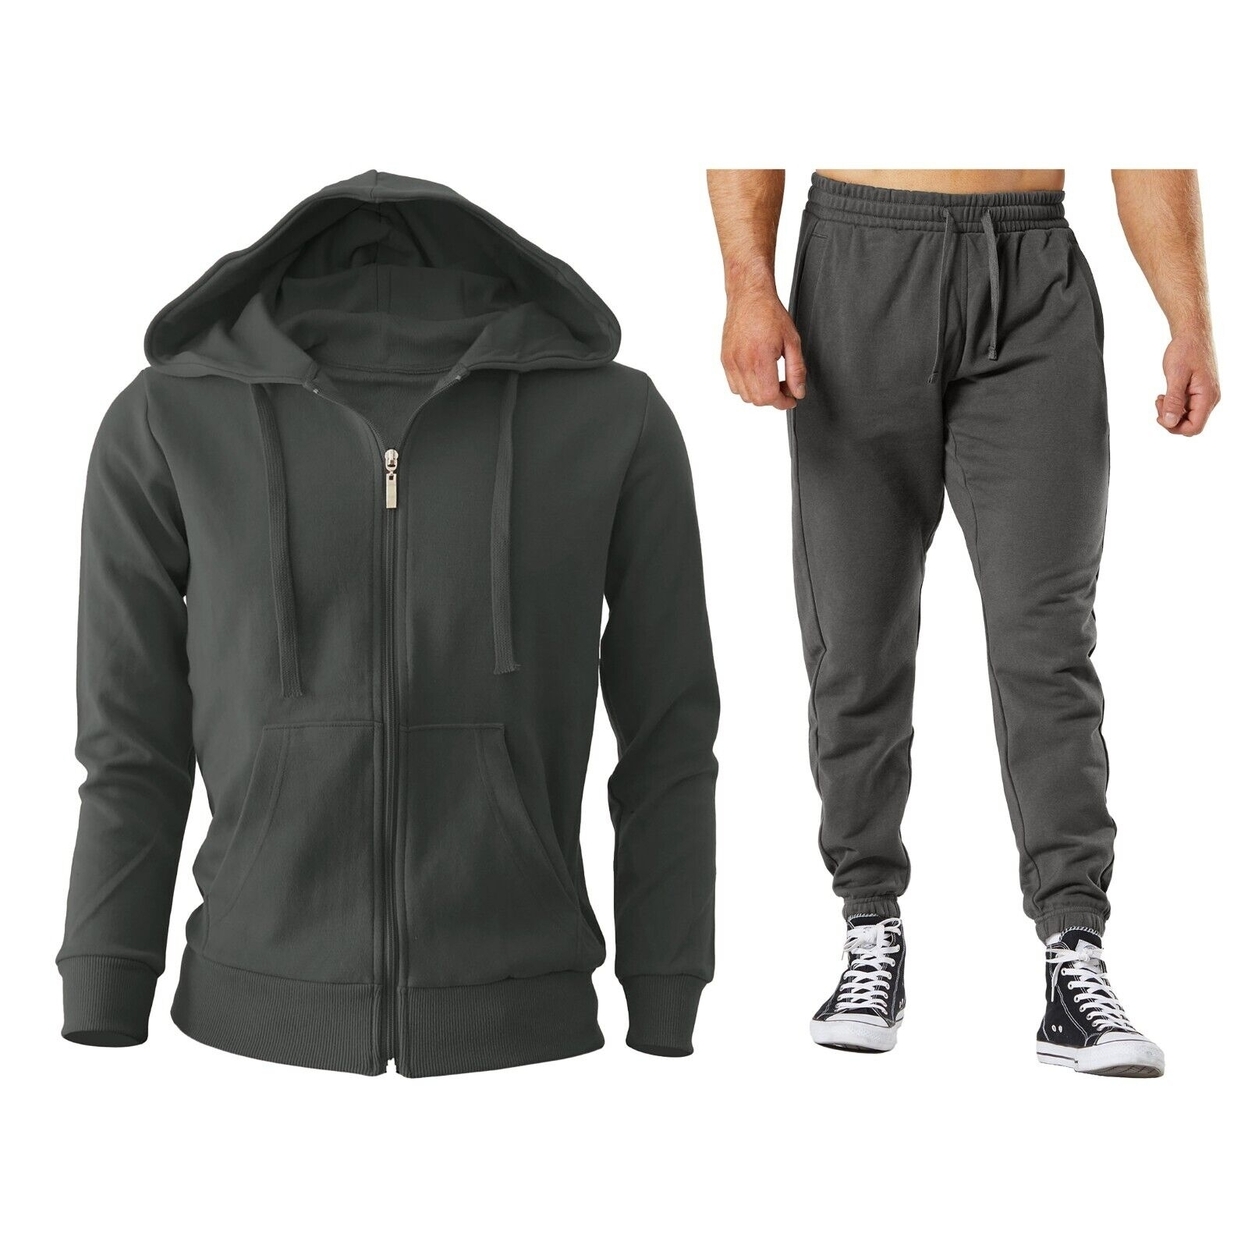 4-Piece: Men's Winter Warm Cozy Athletic Multi-Pockets BIG & TALL Sweatsuit Set - Charcoal, Medium